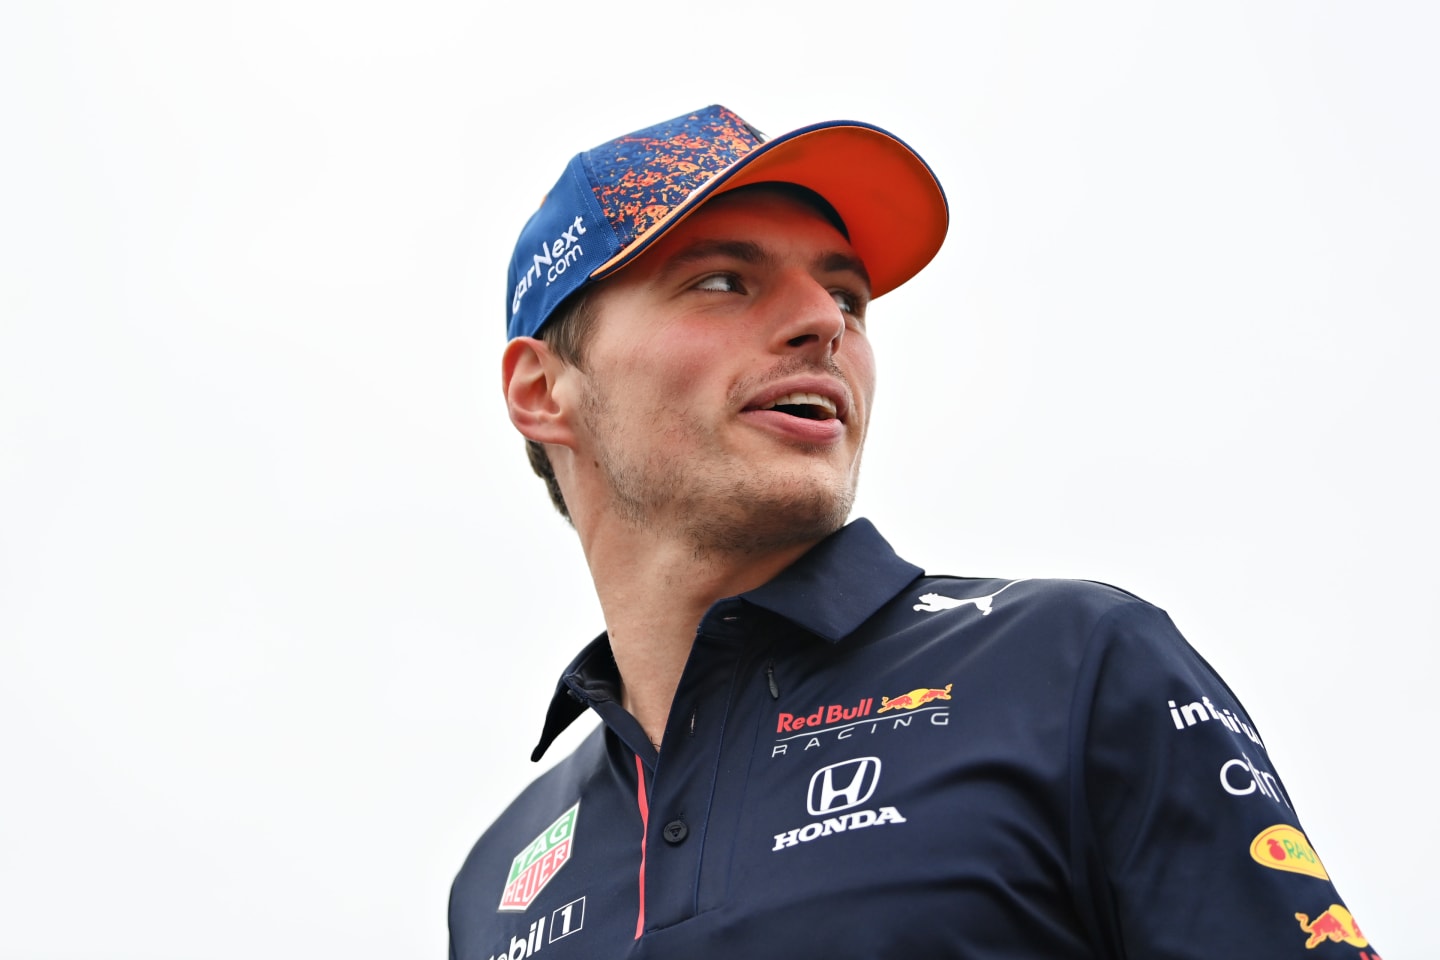 ZANDVOORT, NETHERLANDS - SEPTEMBER 02: Max Verstappen of Netherlands and Red Bull Racing walks the